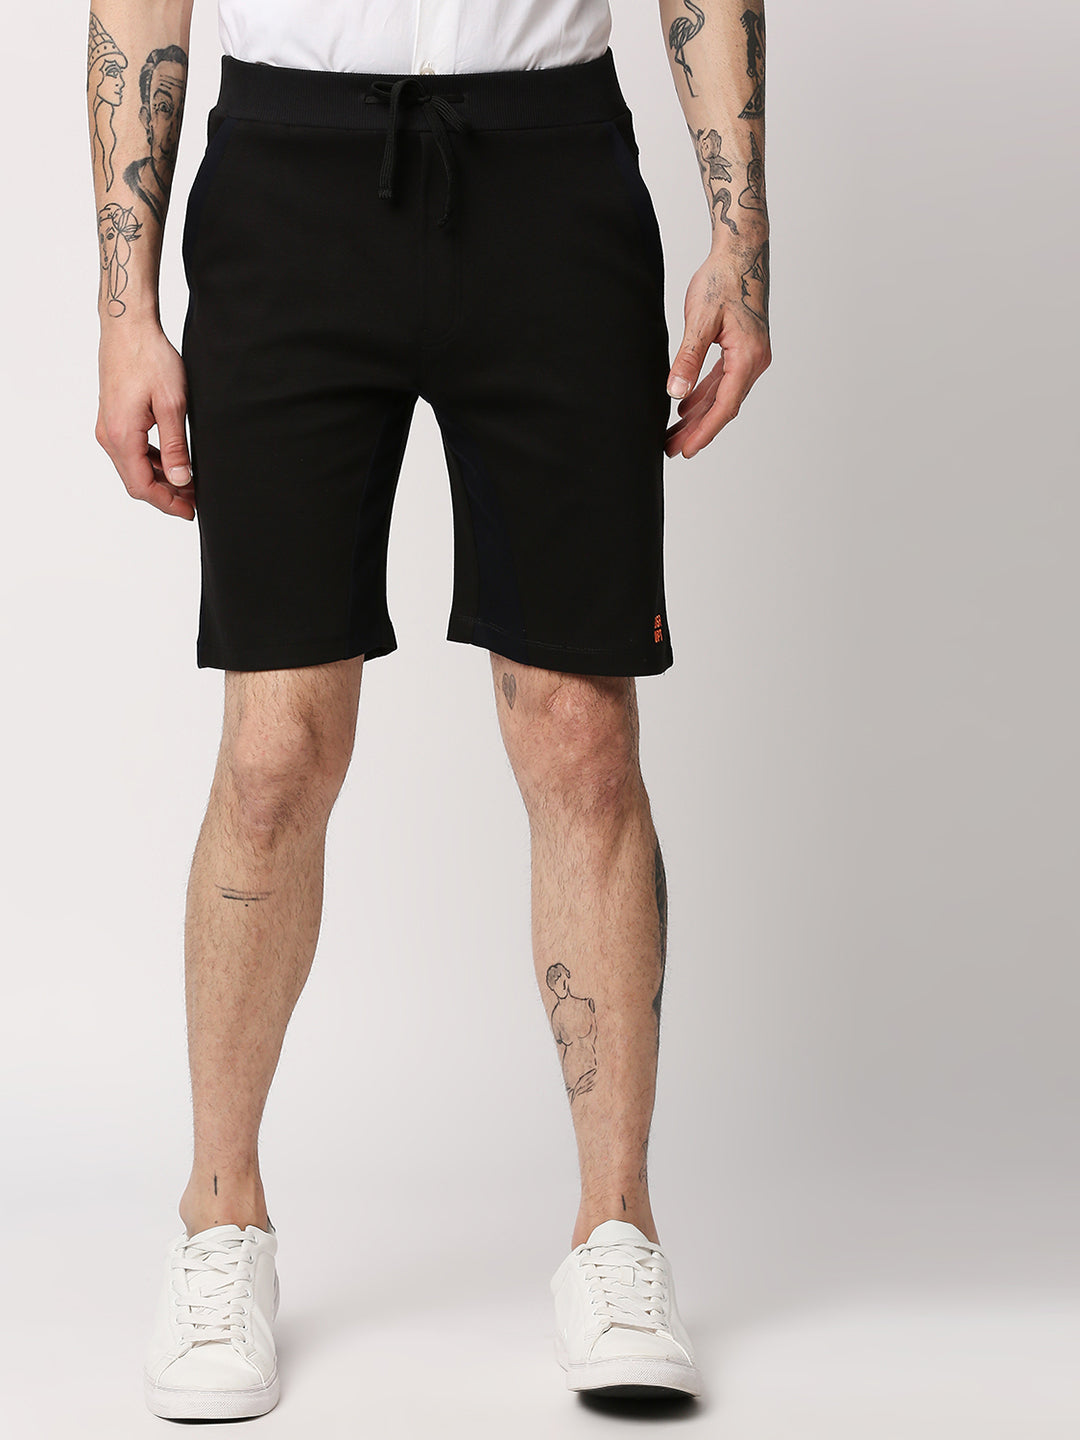 Disrupt Mens Cut-sew Classy Shorts in Jacquard